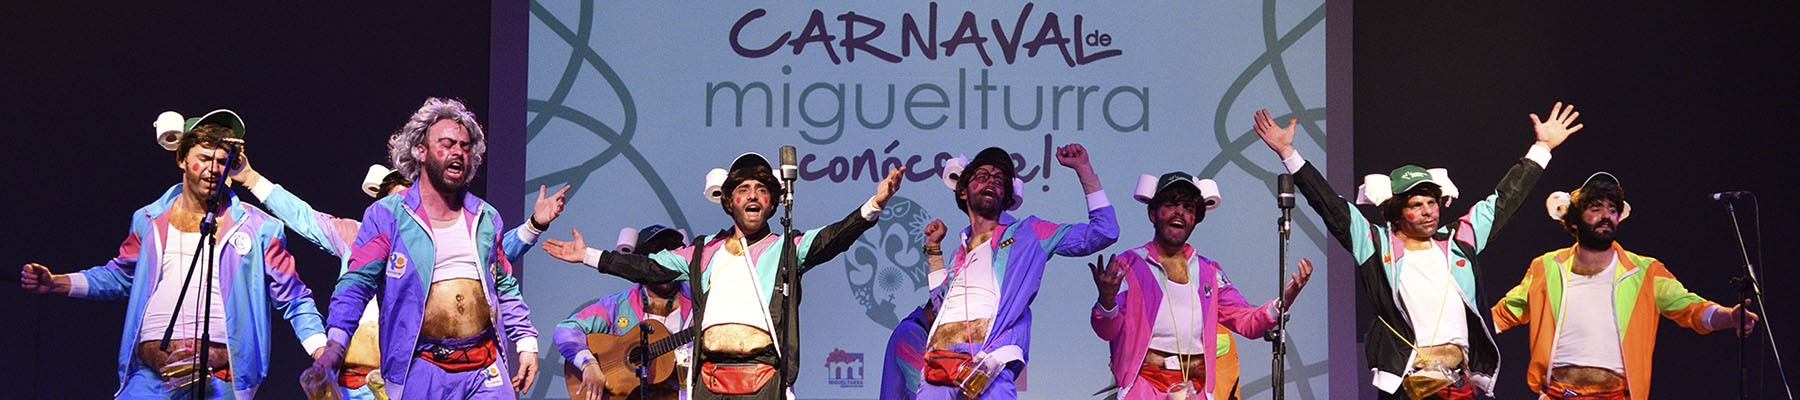 carnival-miguelturra-chirigotas-2020-slaider2